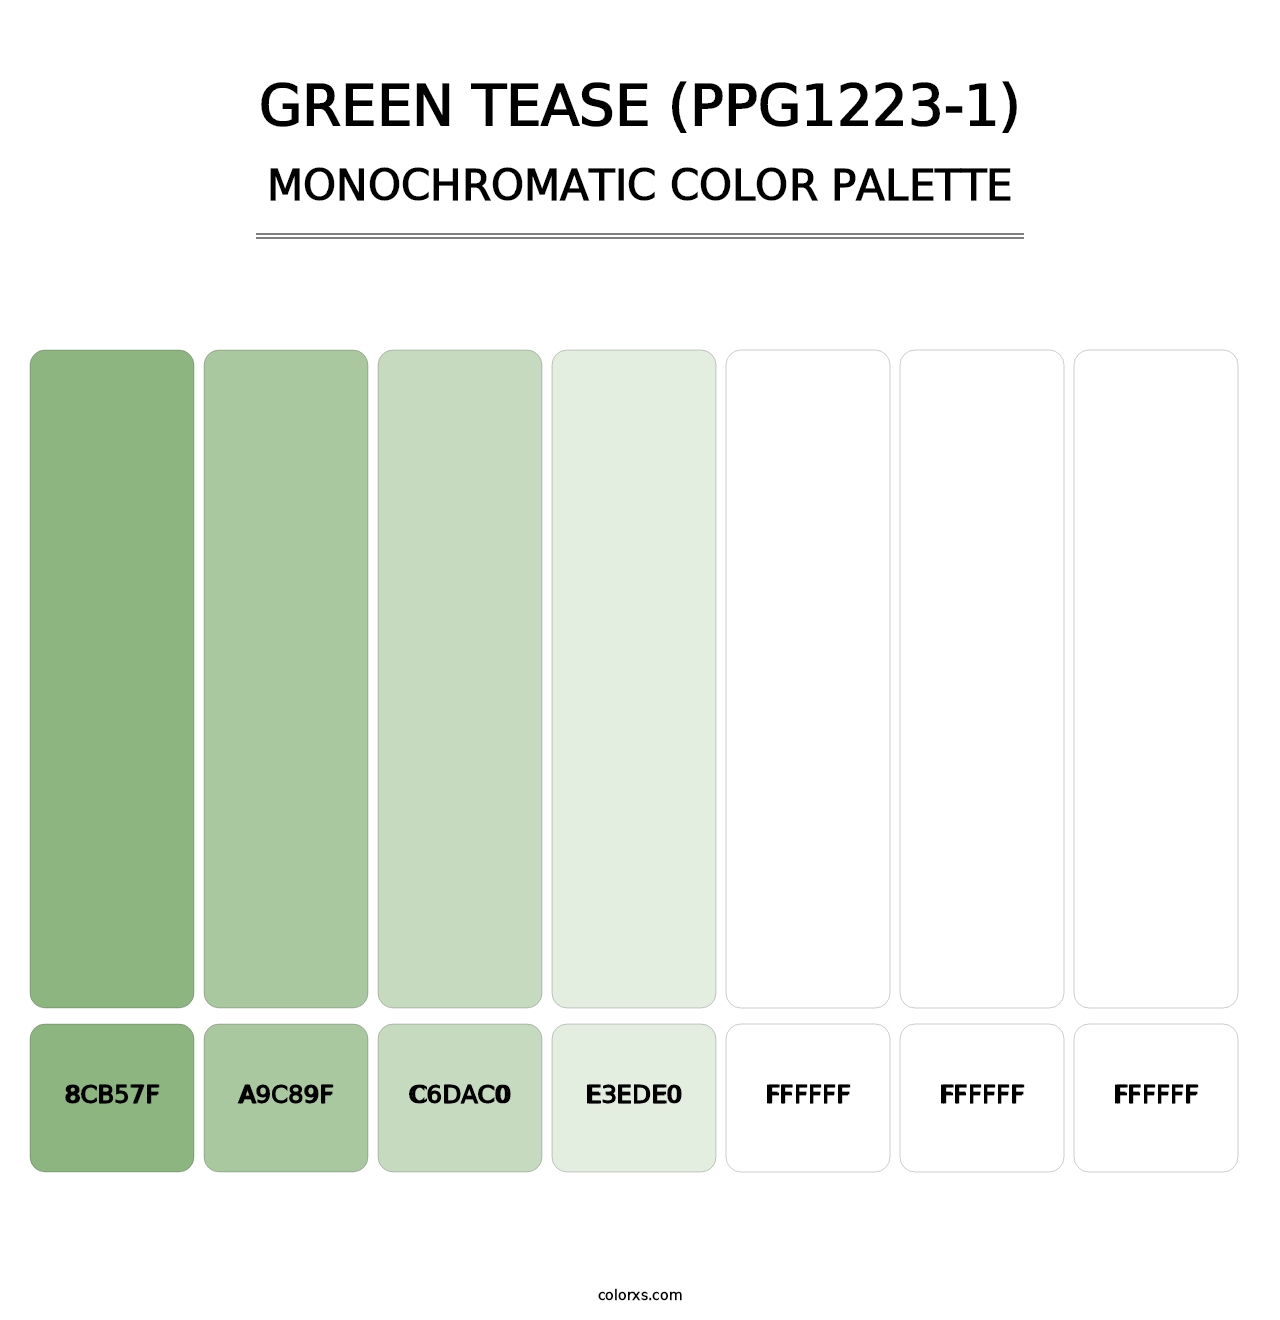 Green Tease (PPG1223-1) - Monochromatic Color Palette